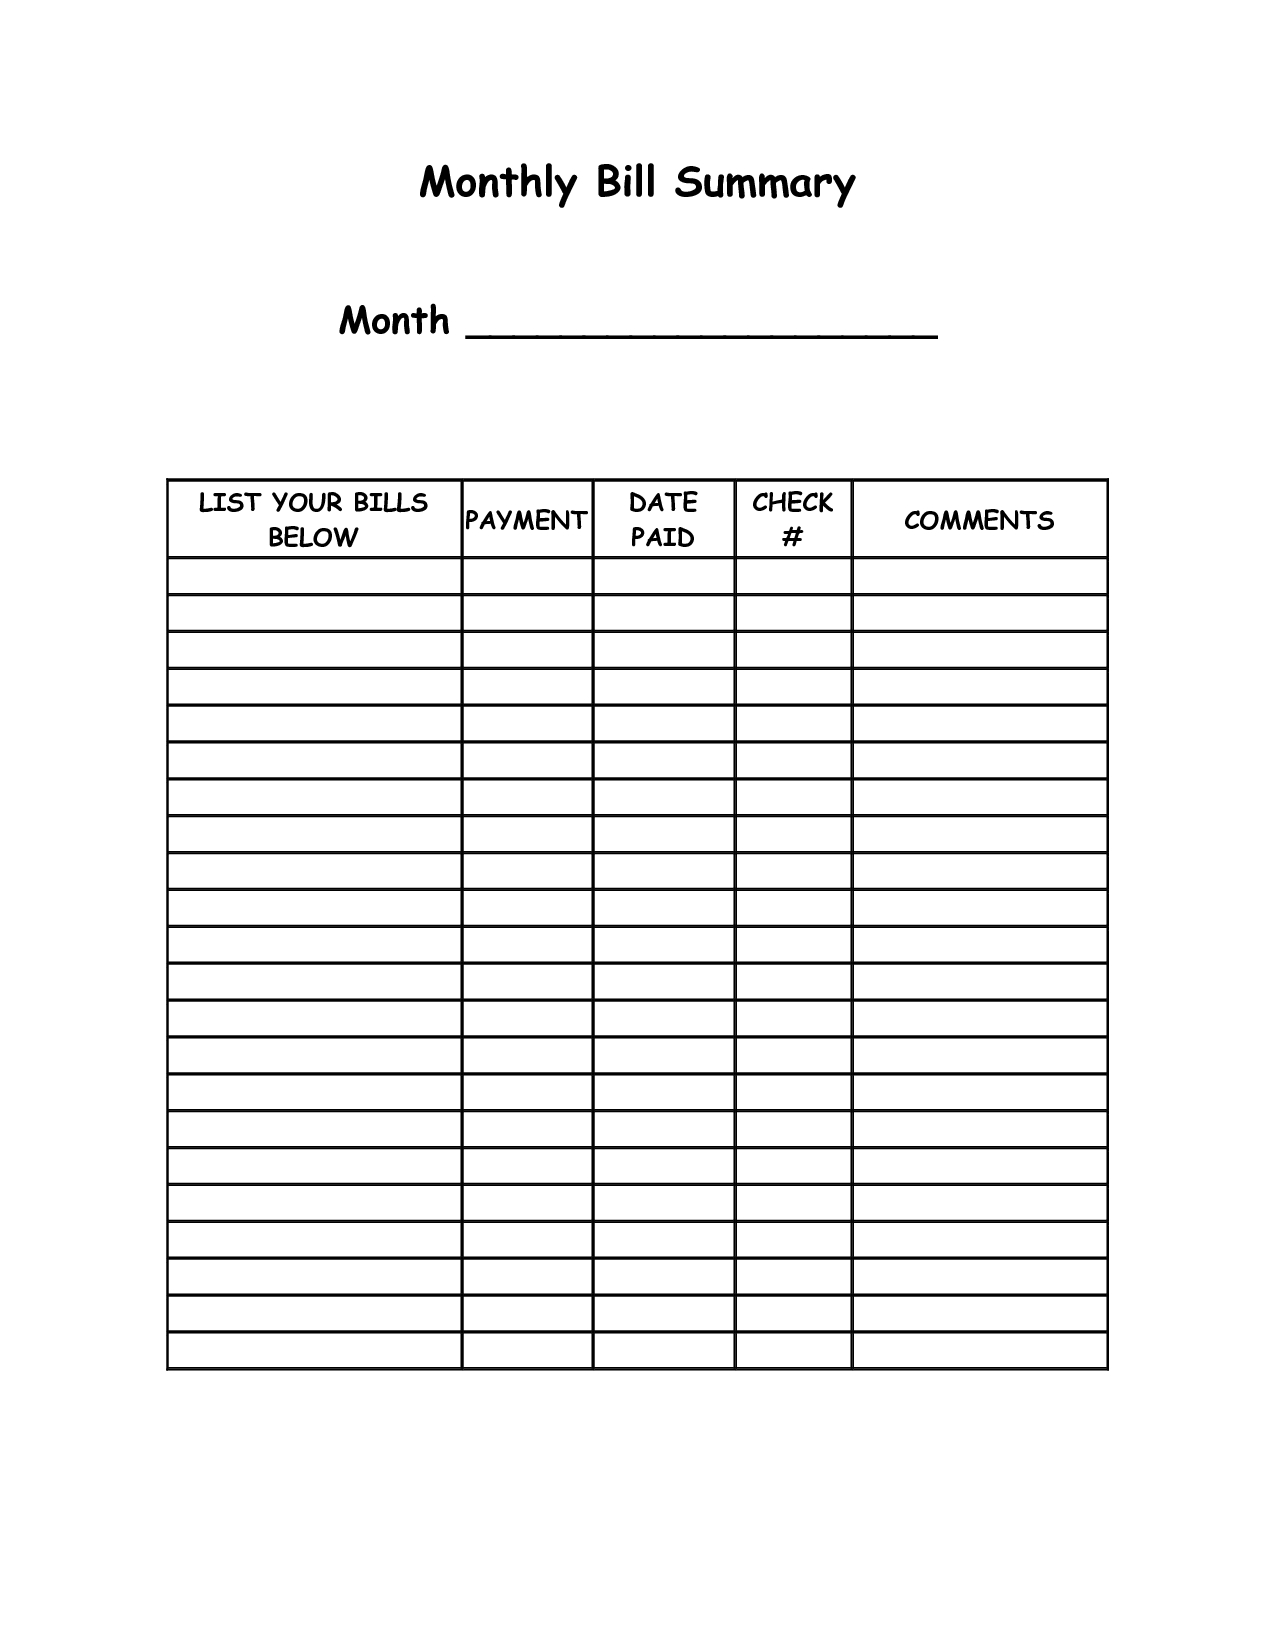 Monthly Bill Summary Doc | Organization | Bill Payment Organization with Free Printable Bill Payment Template